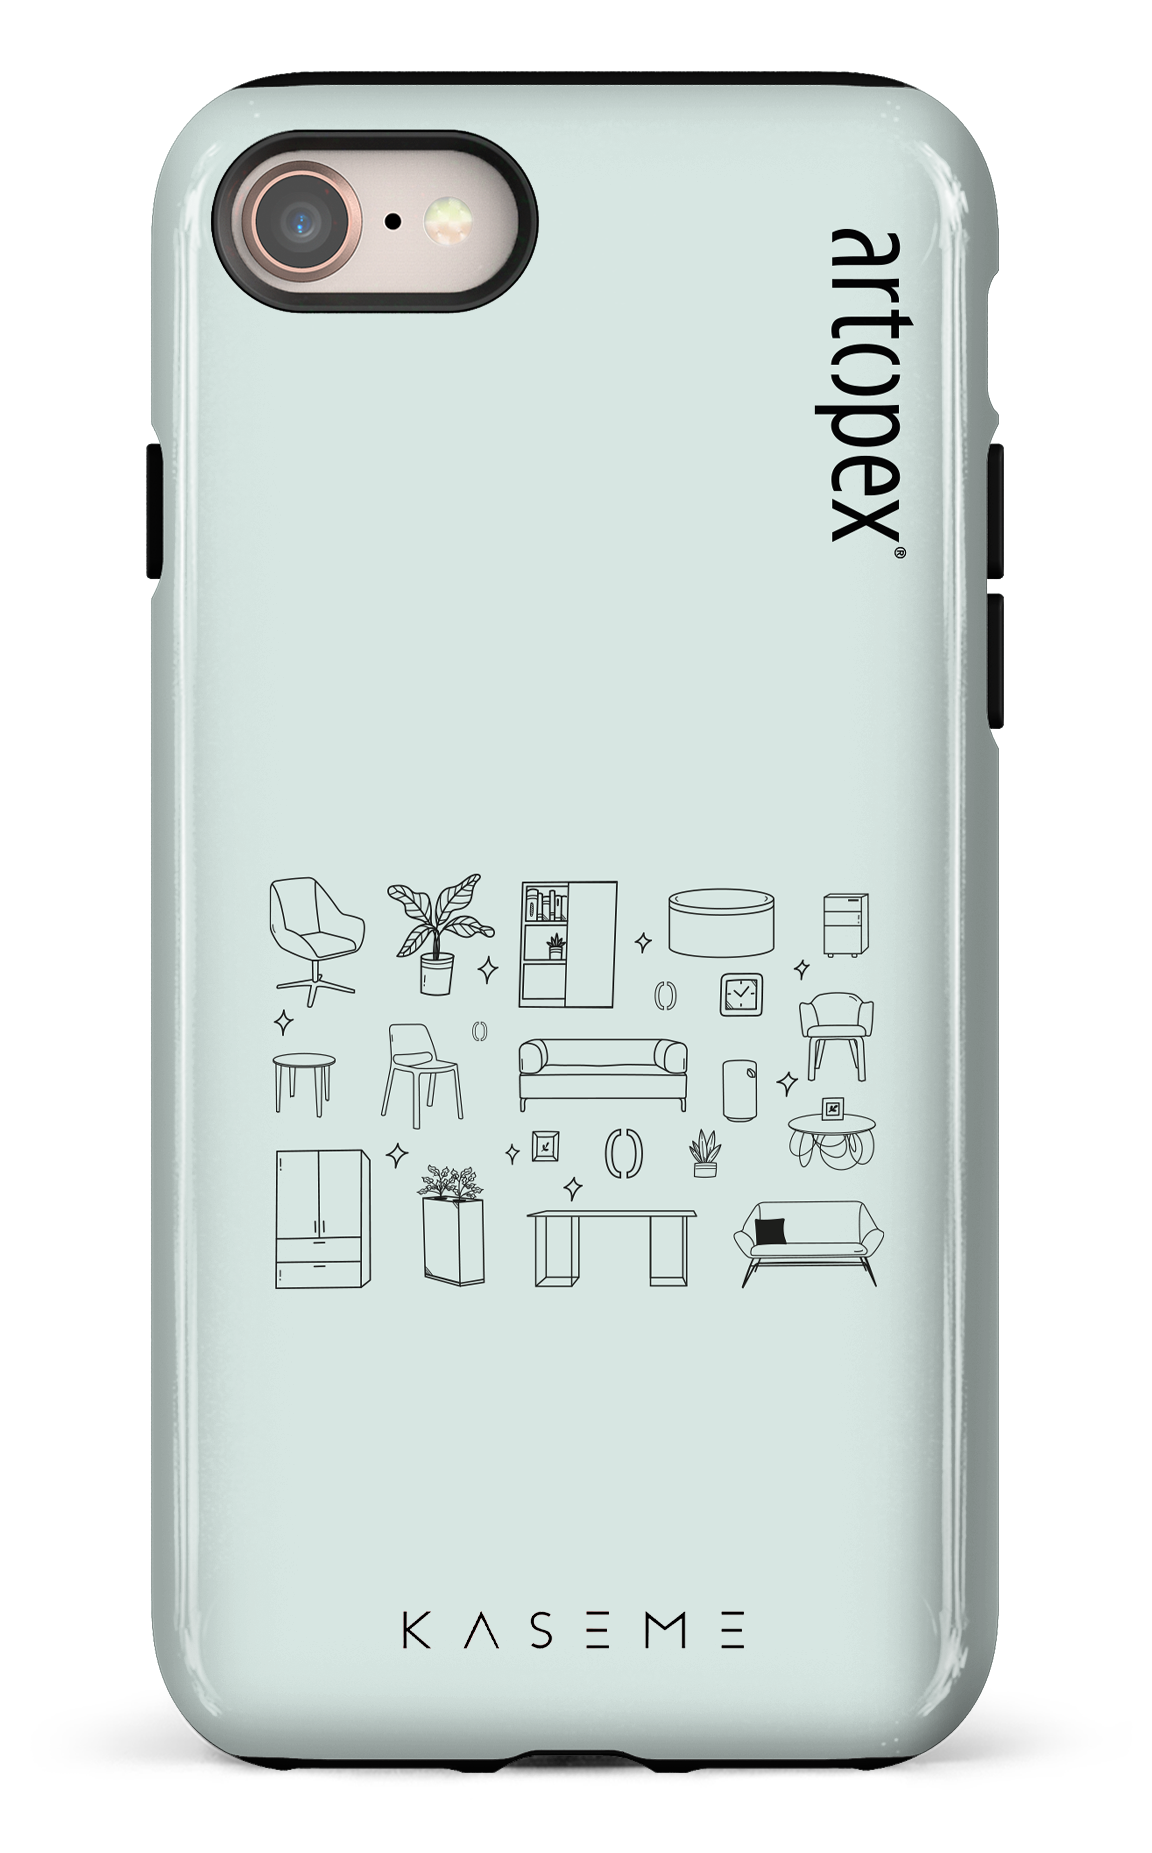 L'essentiel menthe par Artopex - iPhone 7